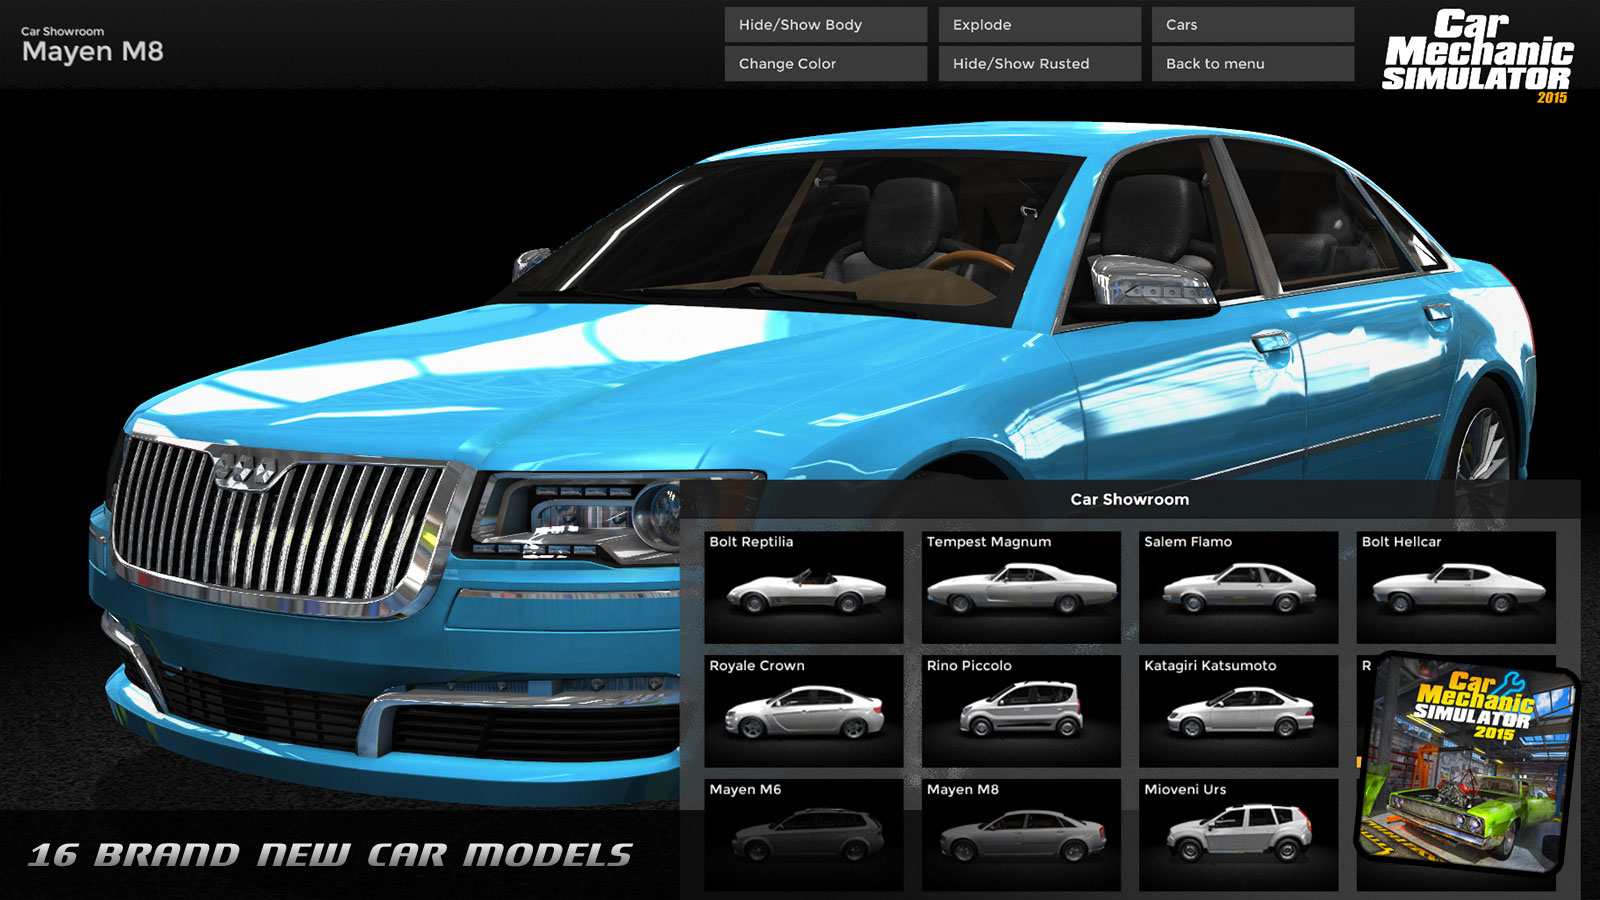 car mechanic simulator 2015 mods pc